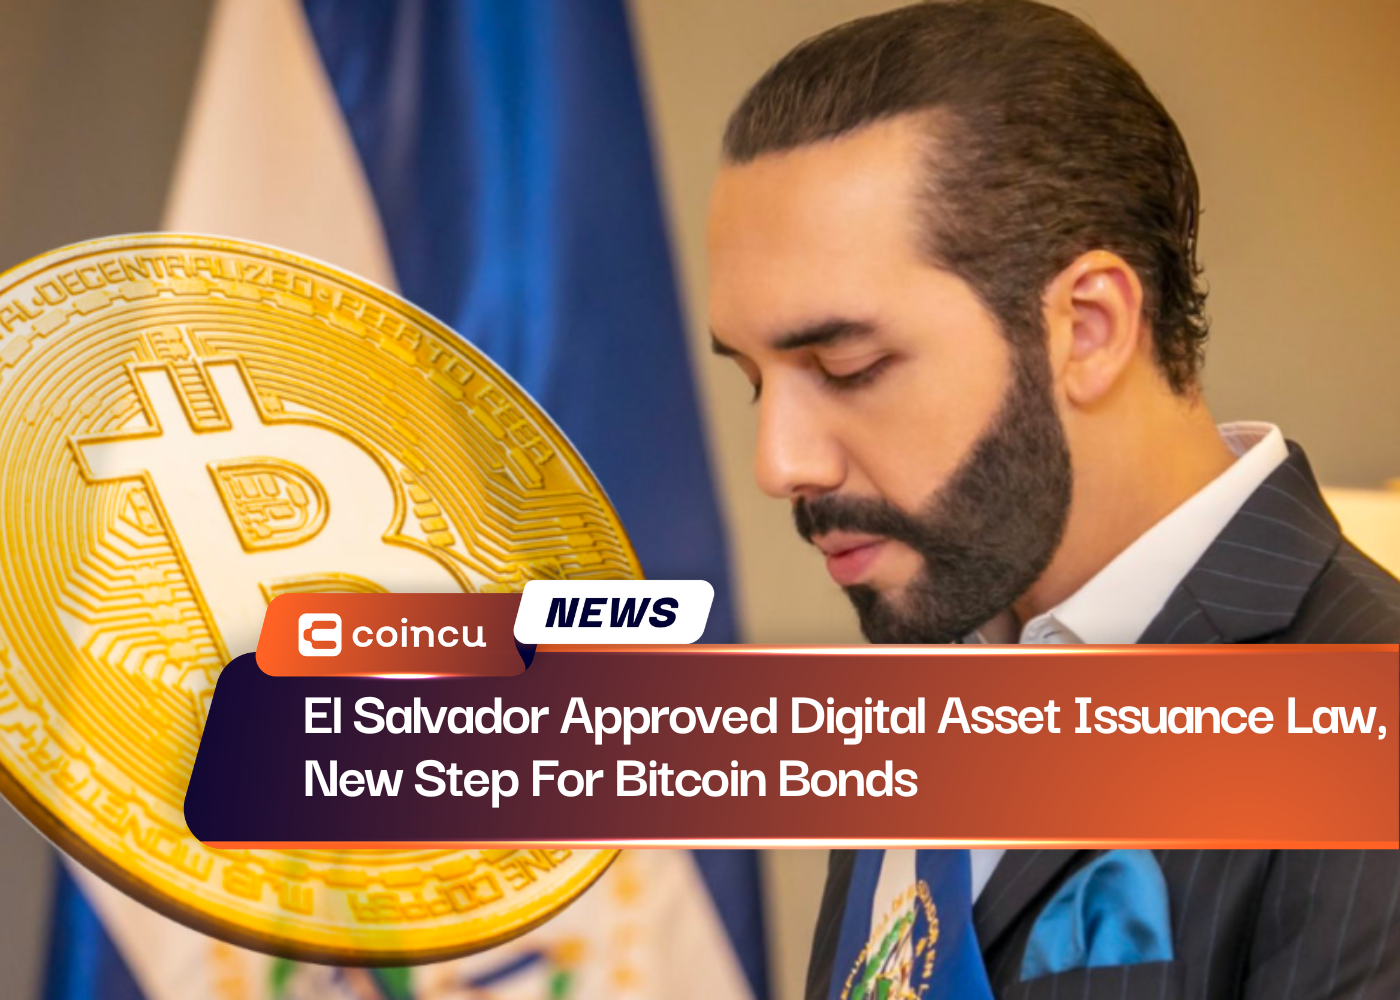 El Salvador Approved Digital Asset Issuance Law, New Step For Bitcoin Bonds